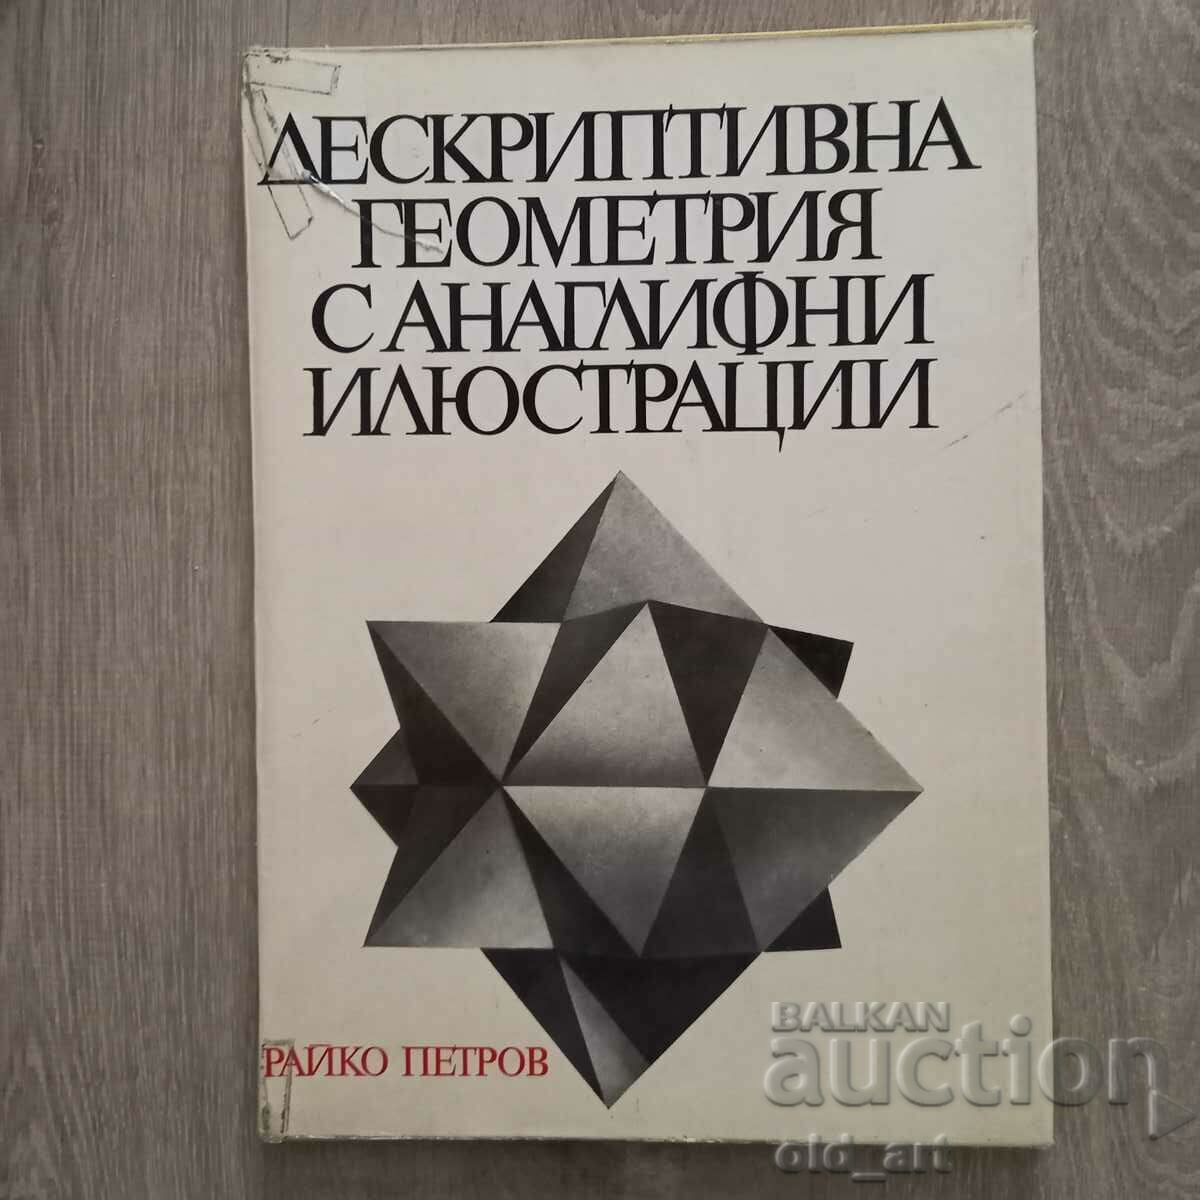 Book - Descriptive geometry